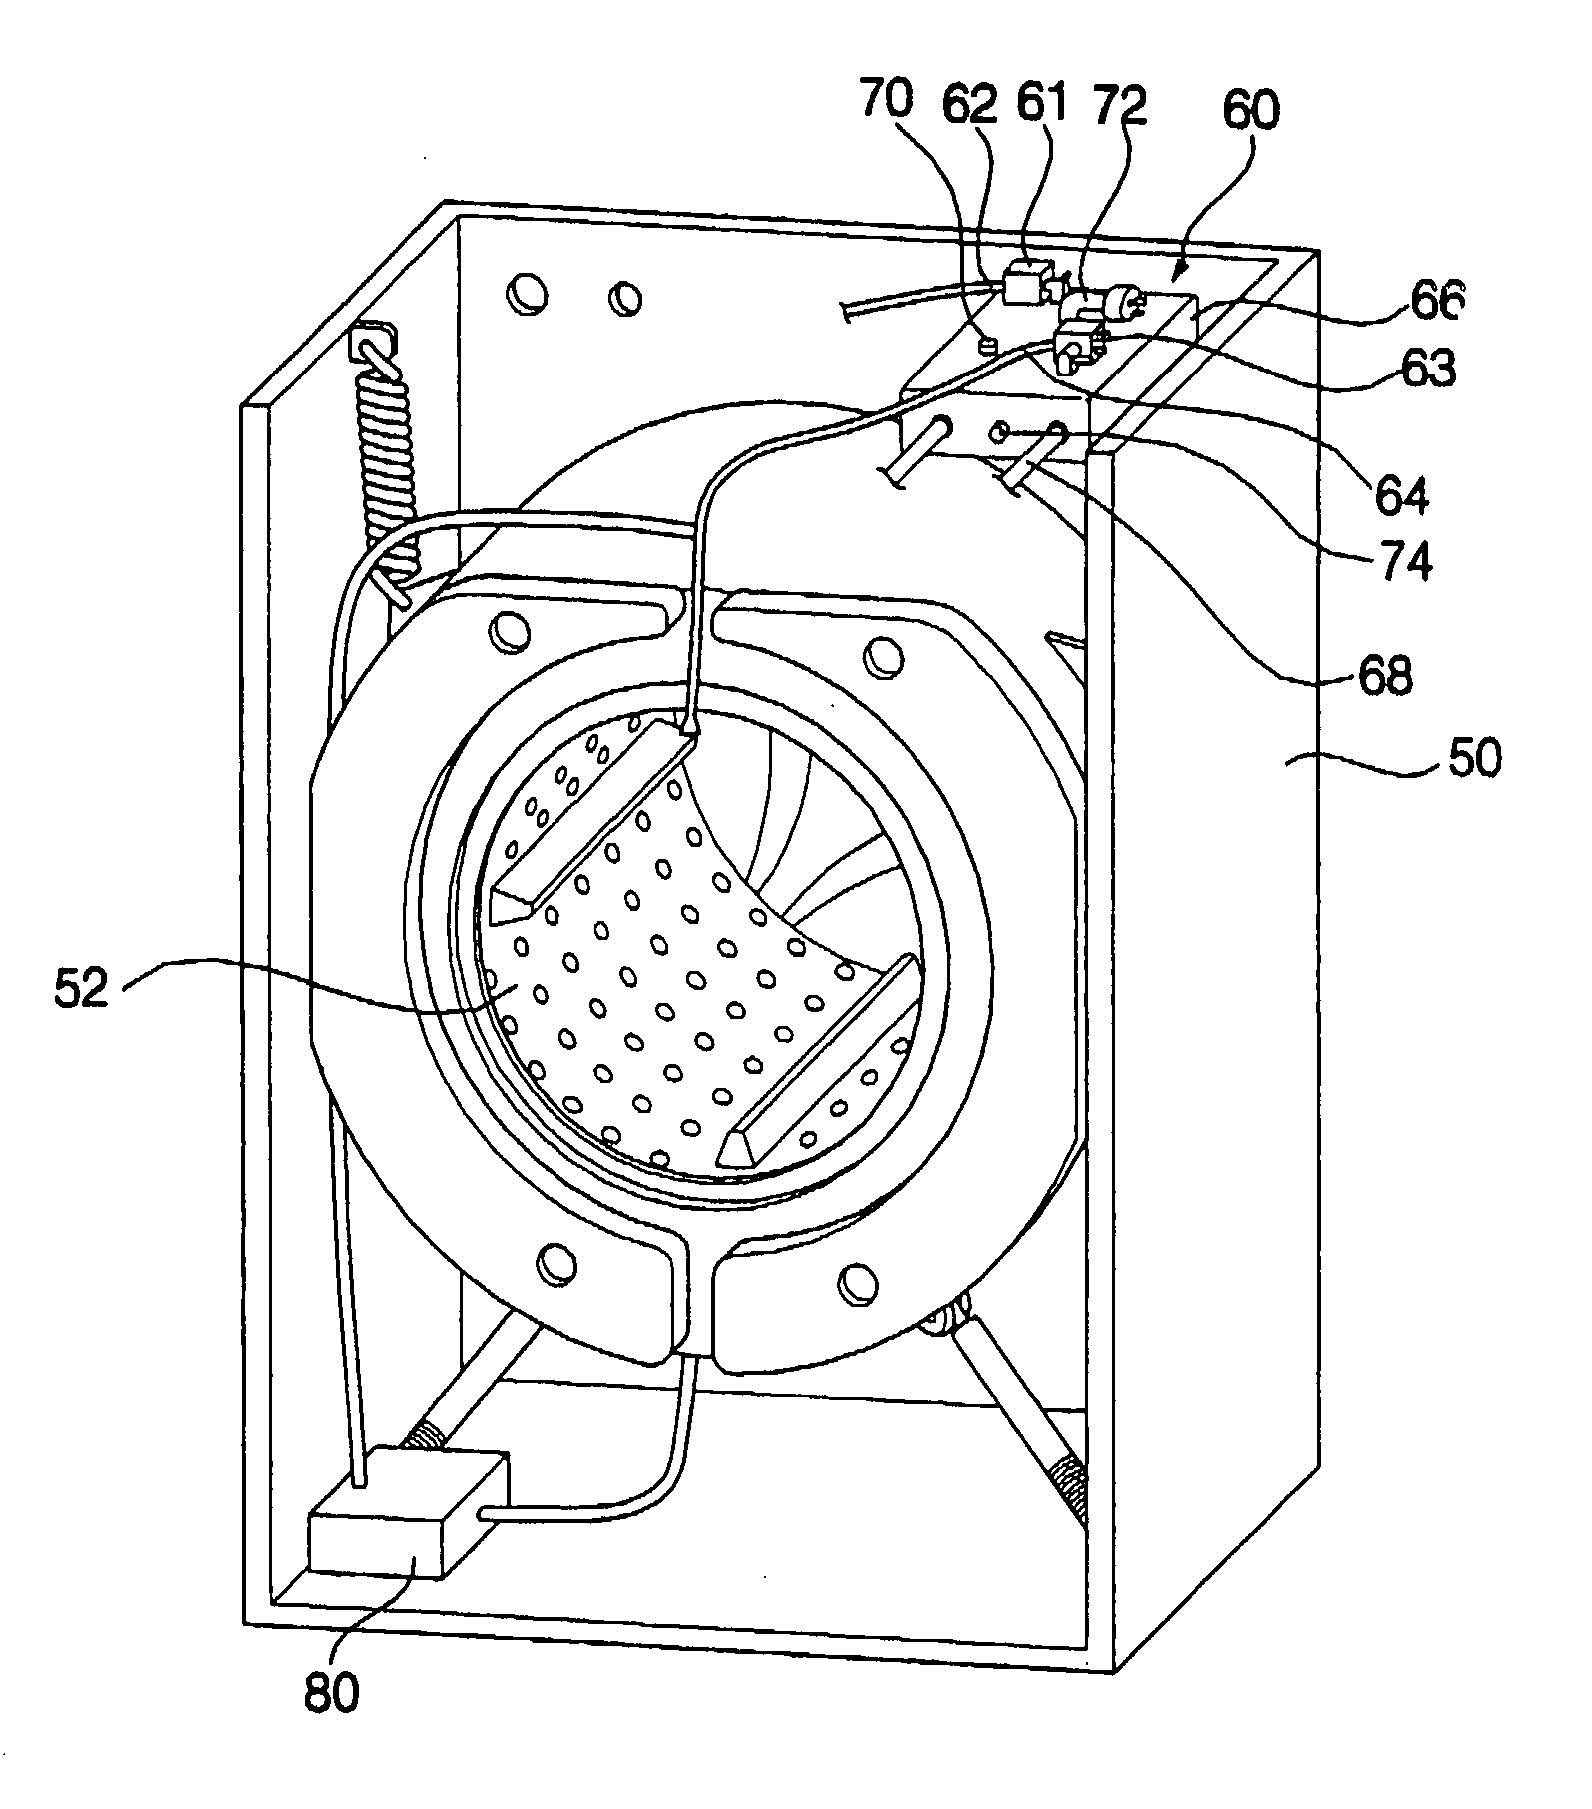 Washing method in steam injection type washing machine